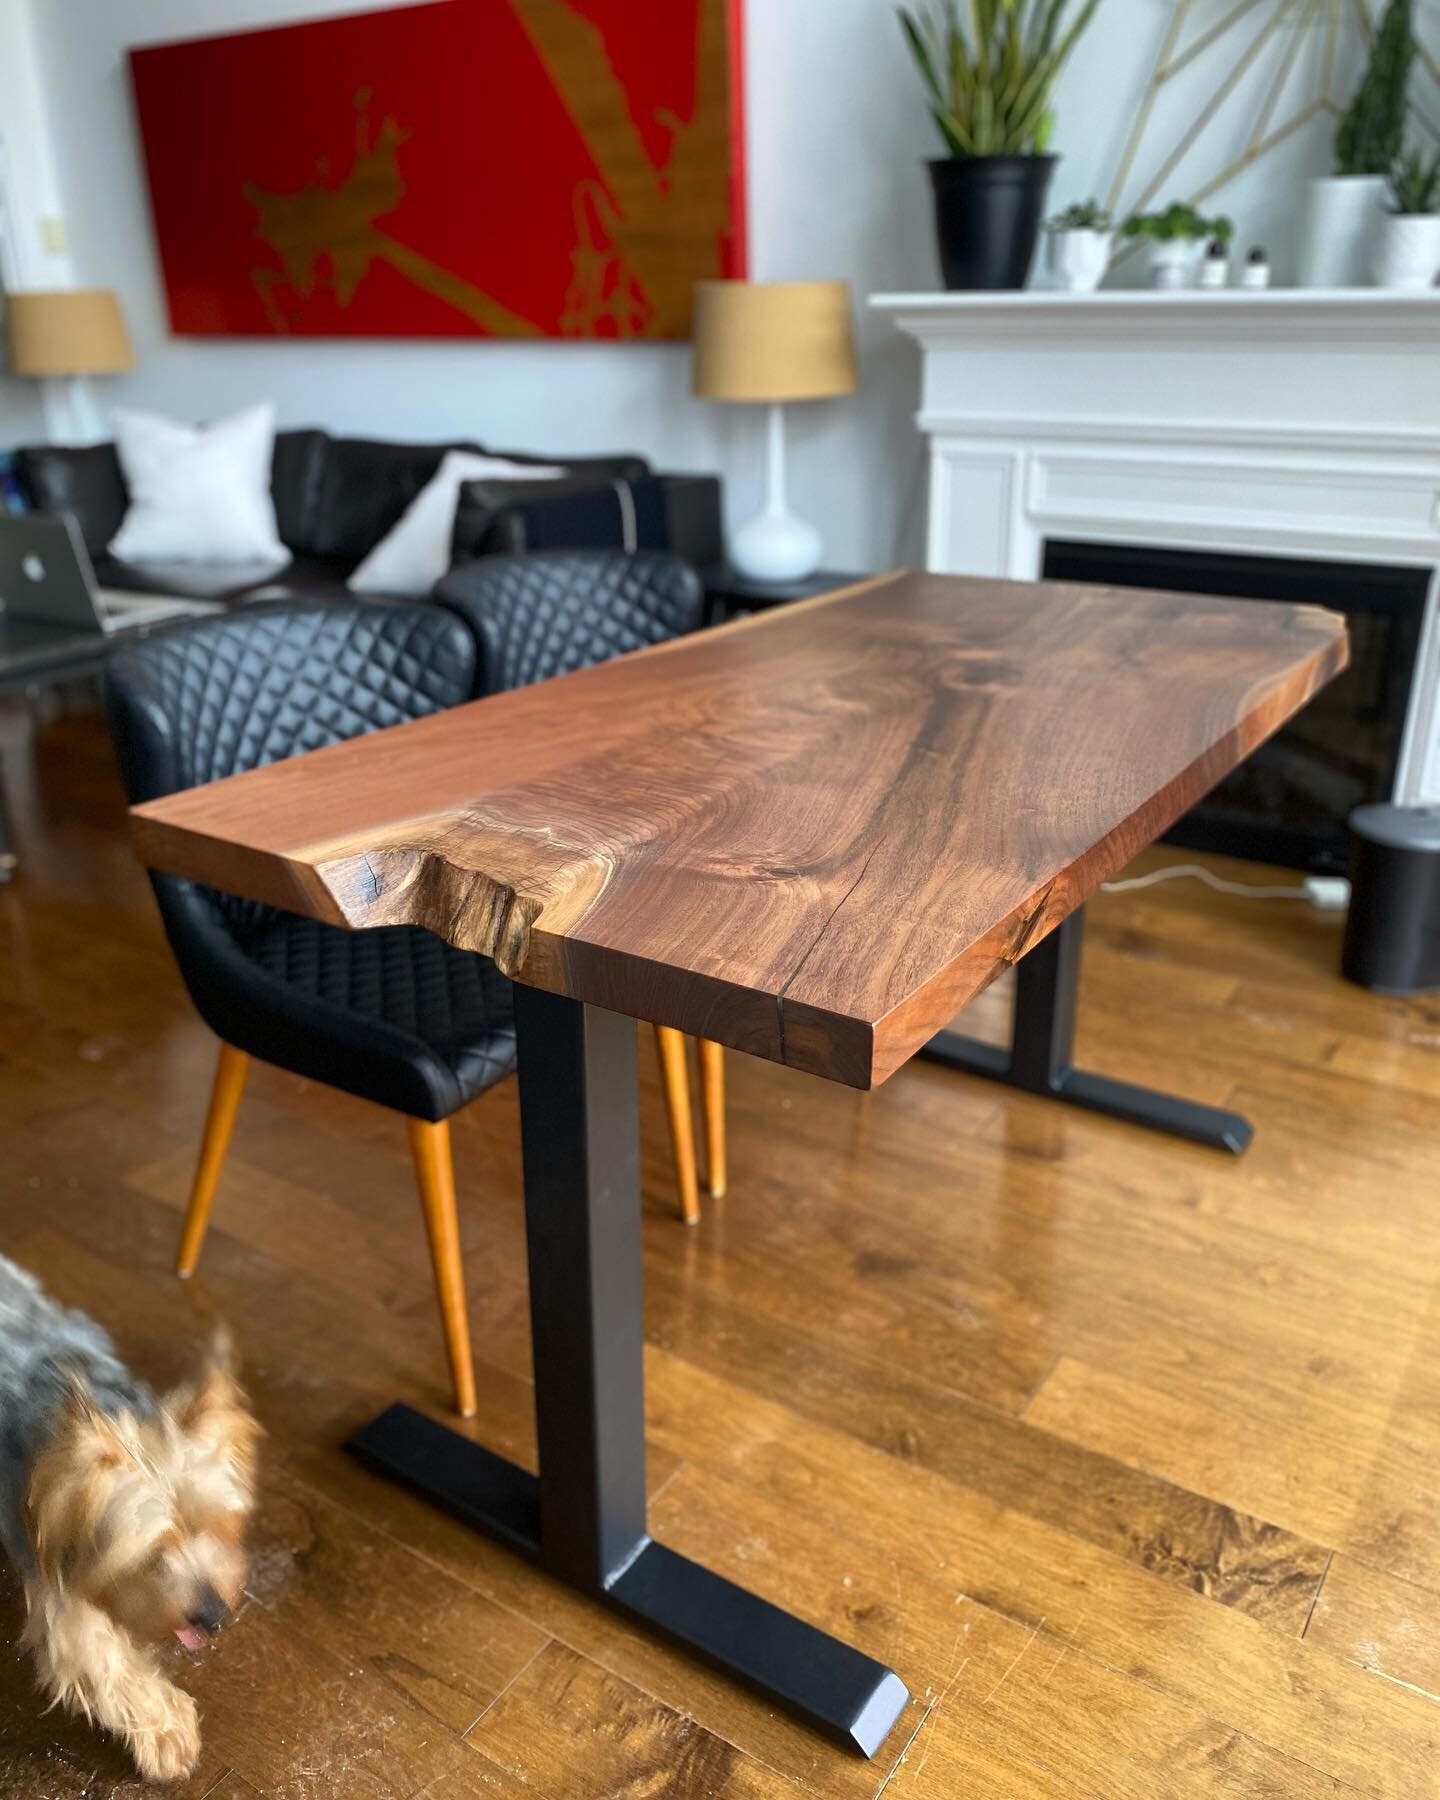 Single slab walnut desk for the home office
.
#desk #homeoffice #customdesk #walnut #singleslab #wood